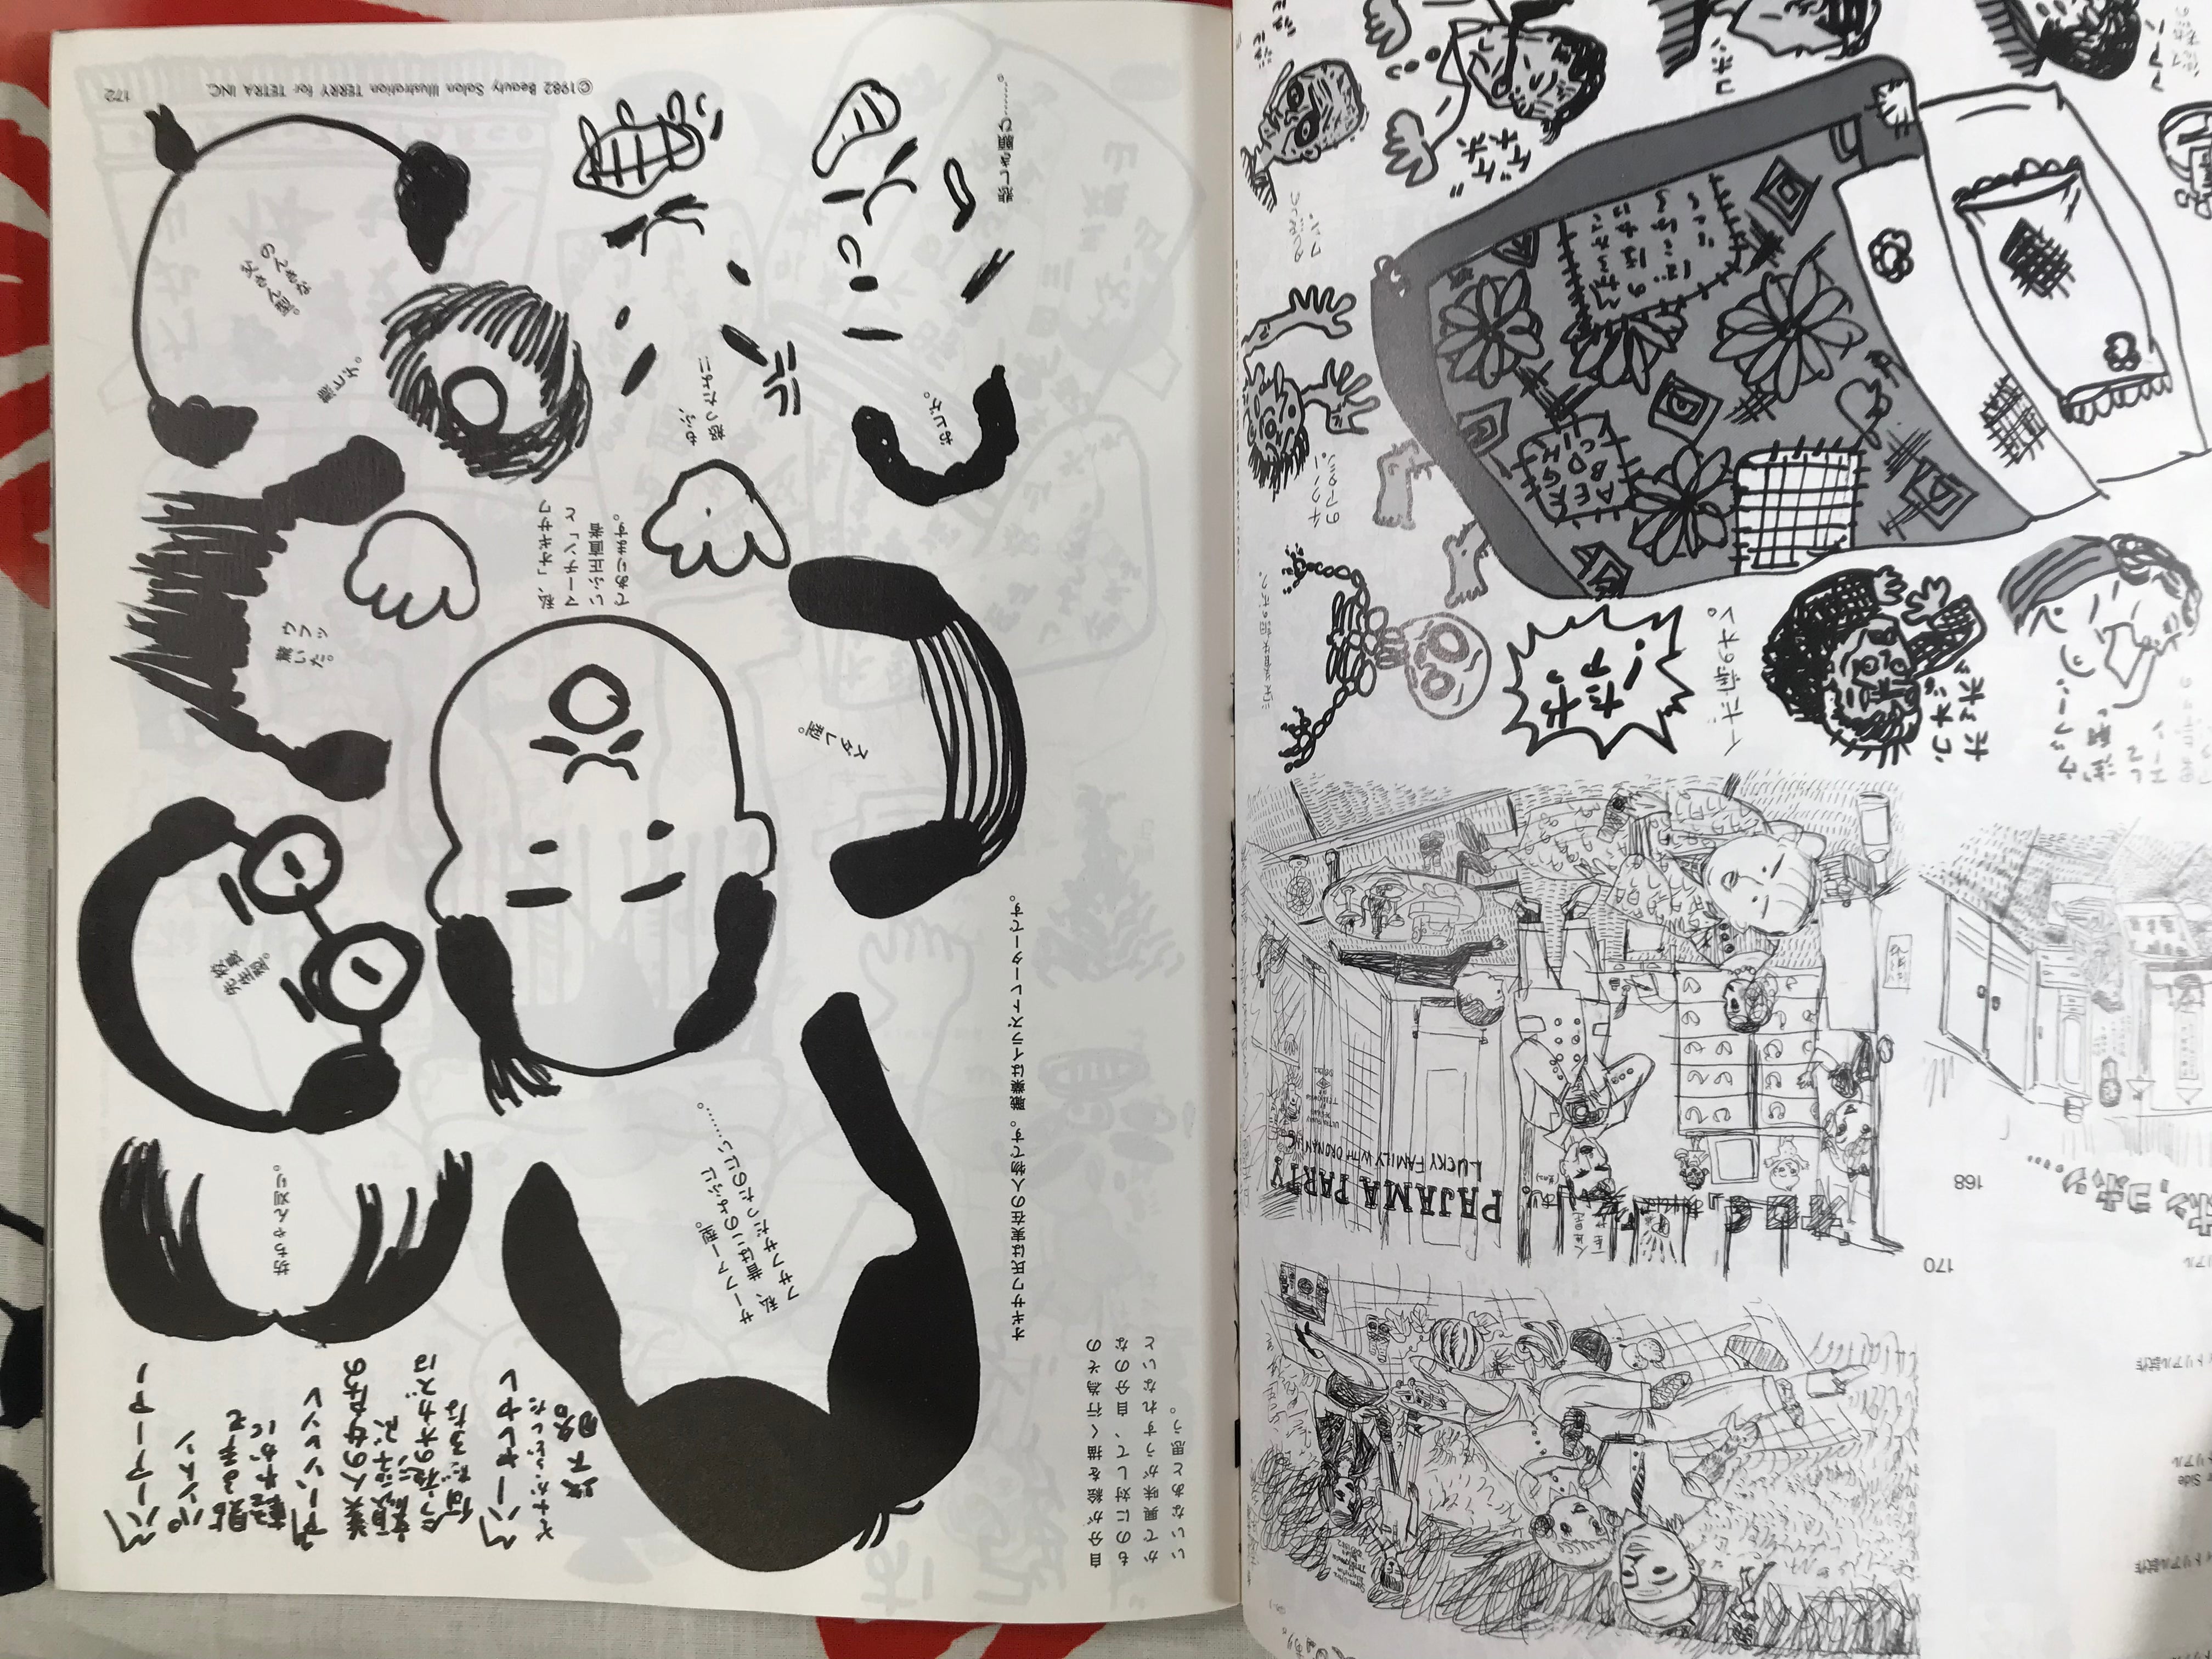 Works of Teruhiko Yumura vs Works of Yosuke Kawamura (1984)